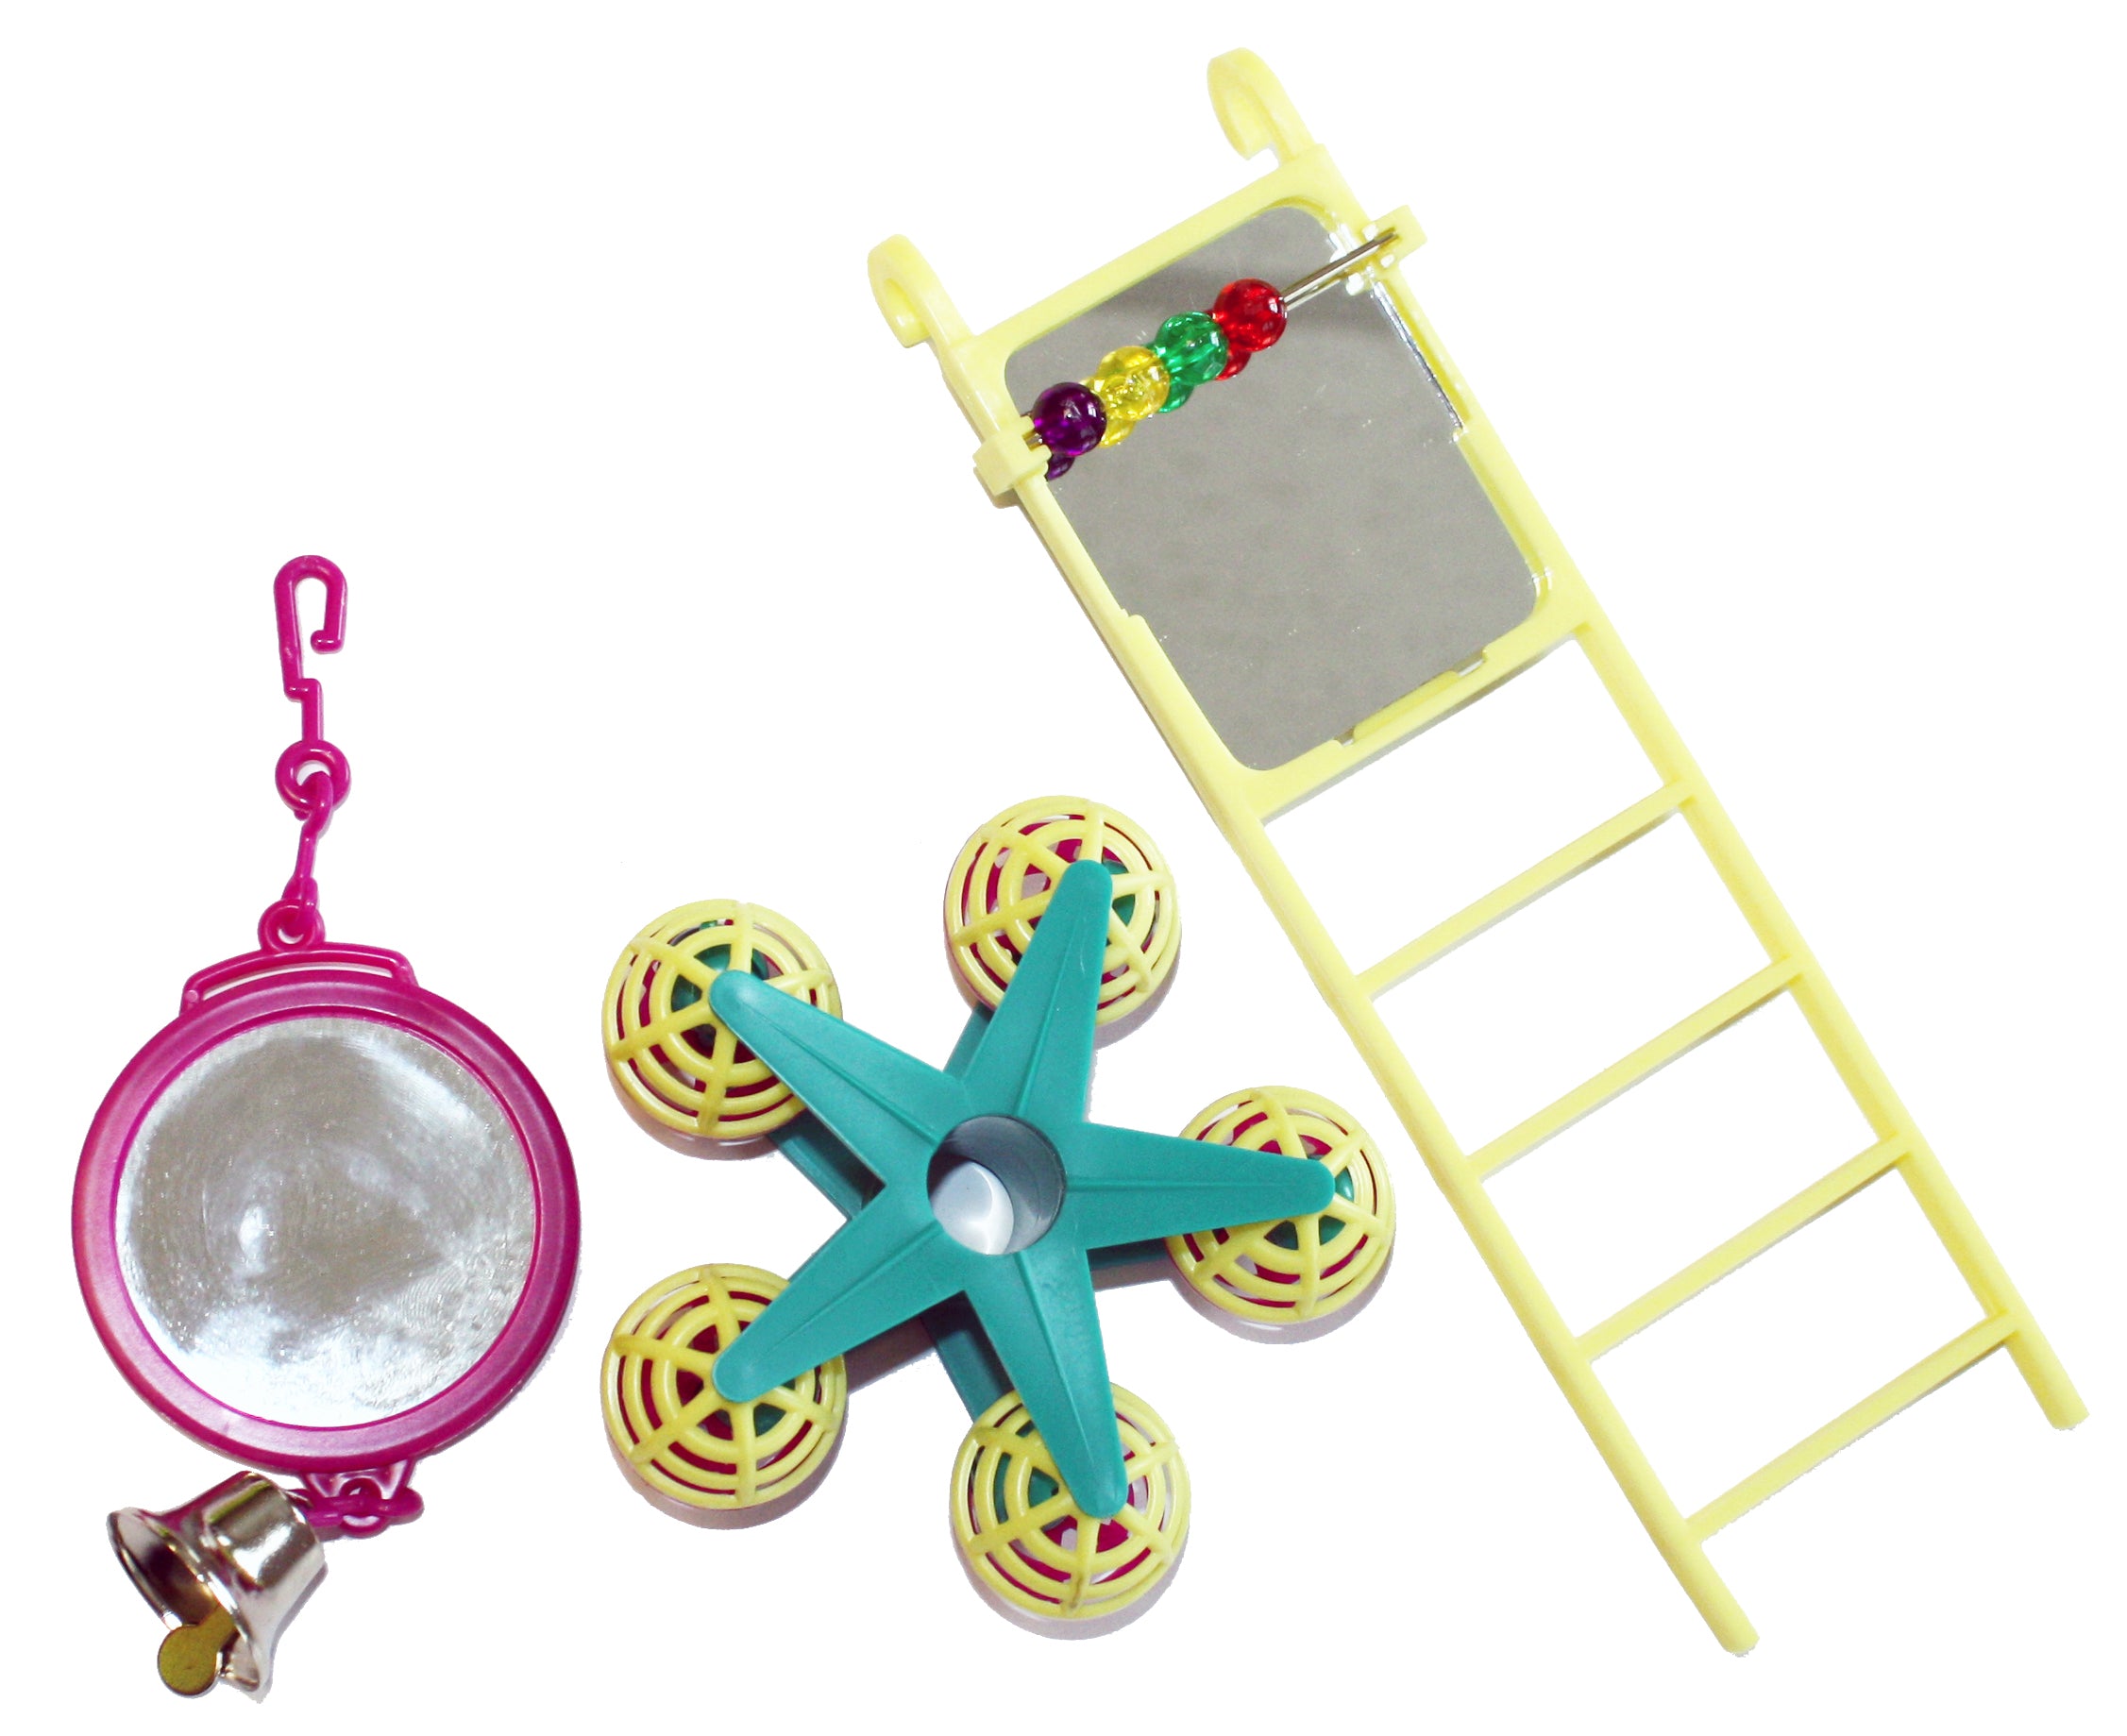 Happy Pet - Parkieten speelgoed set met spiegel, ladder en carrousel